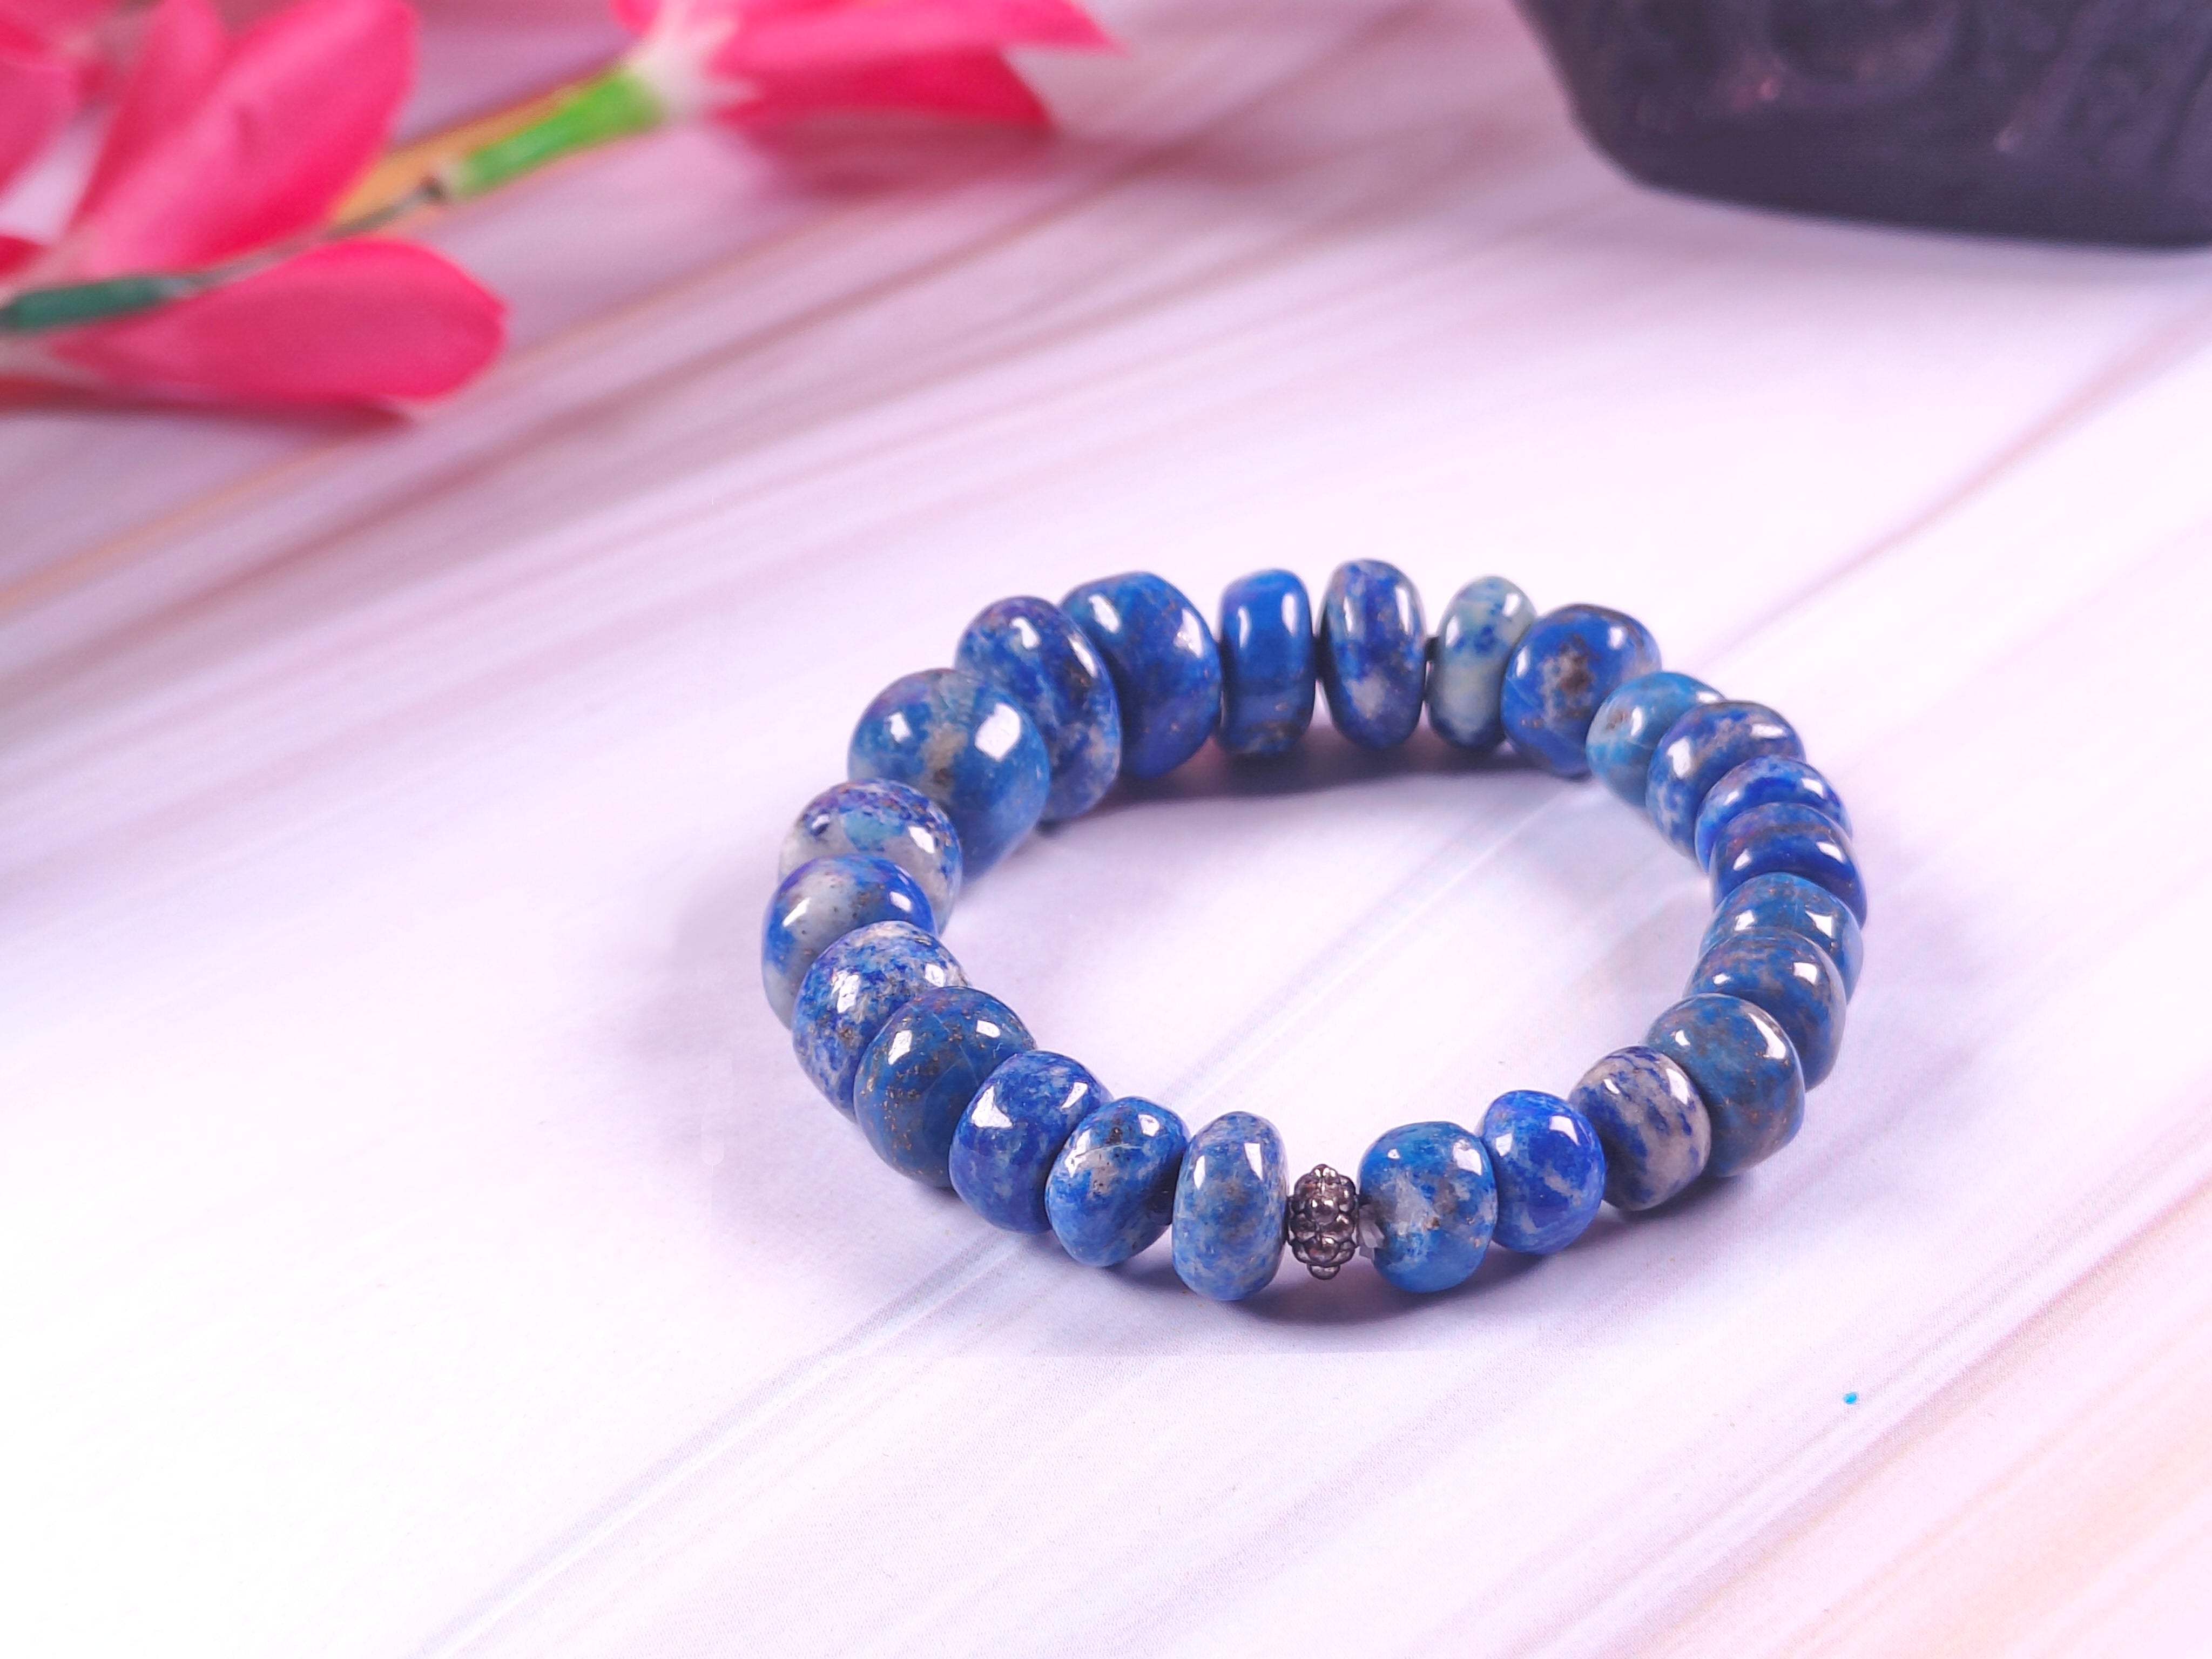 Spiritual Connection - Lapis Lazuli & Blue Opal Beads Bracelet - Satori  Jewelry